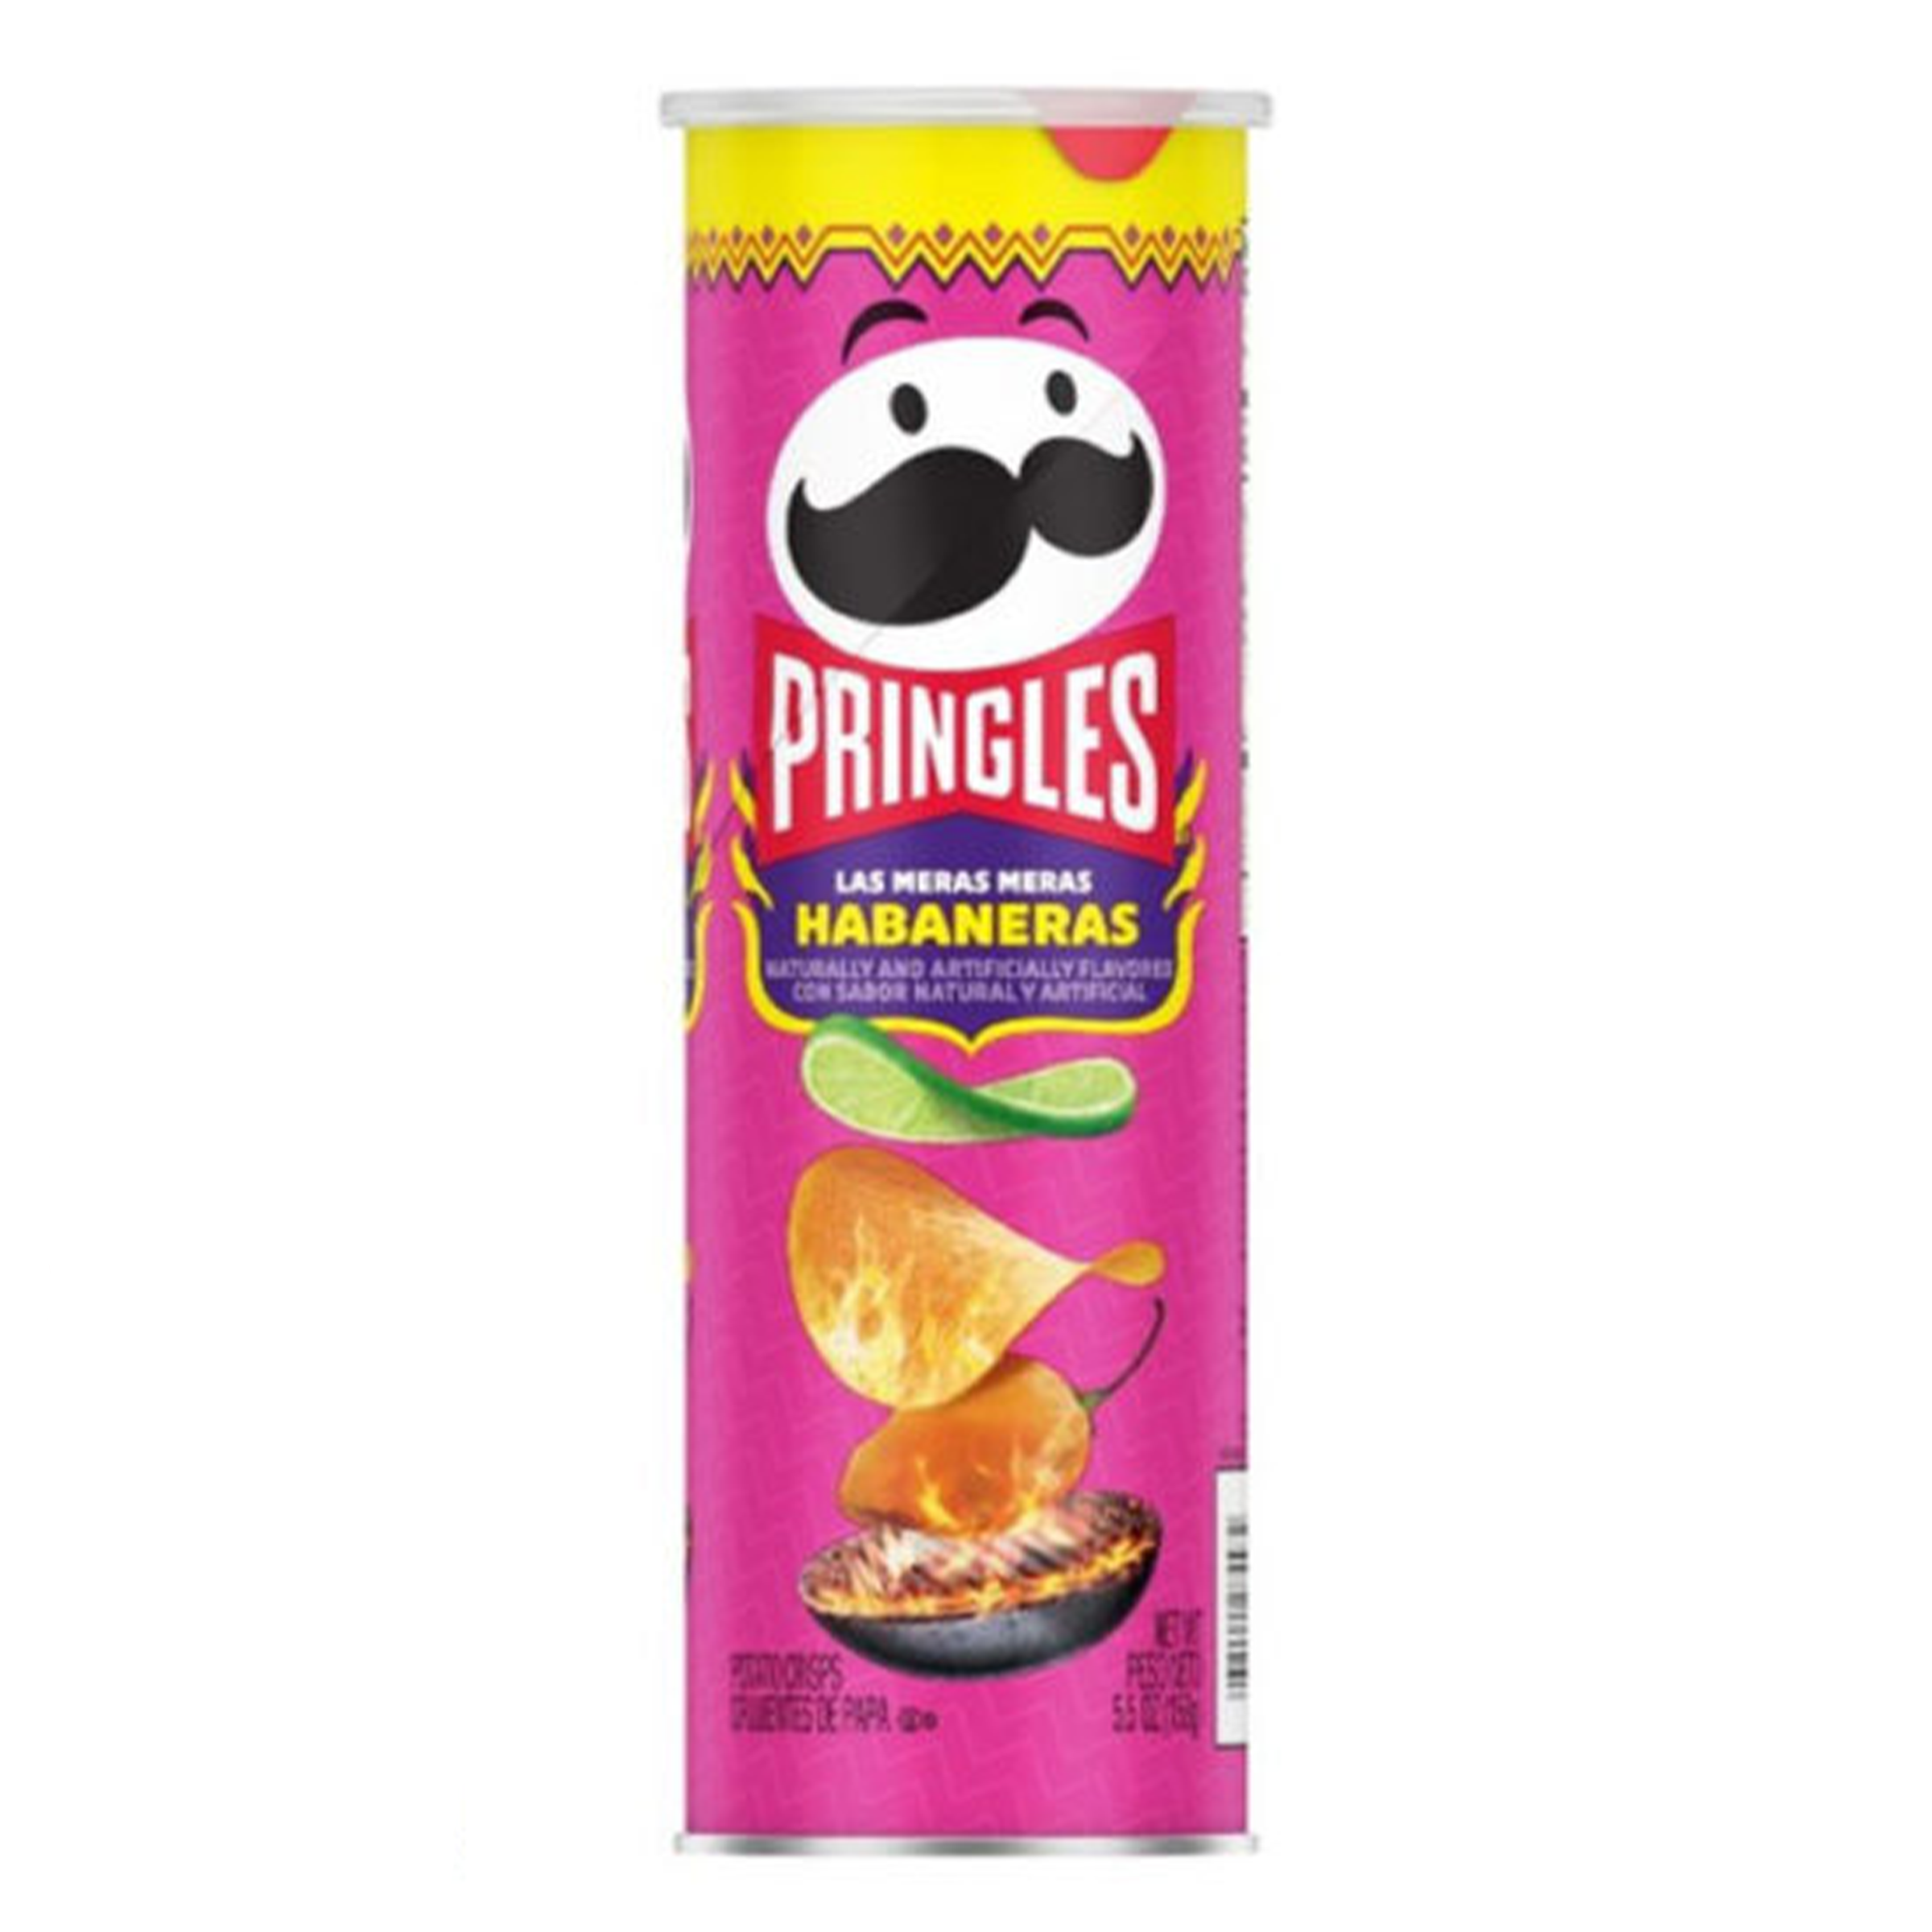 Pringles - Habaneras